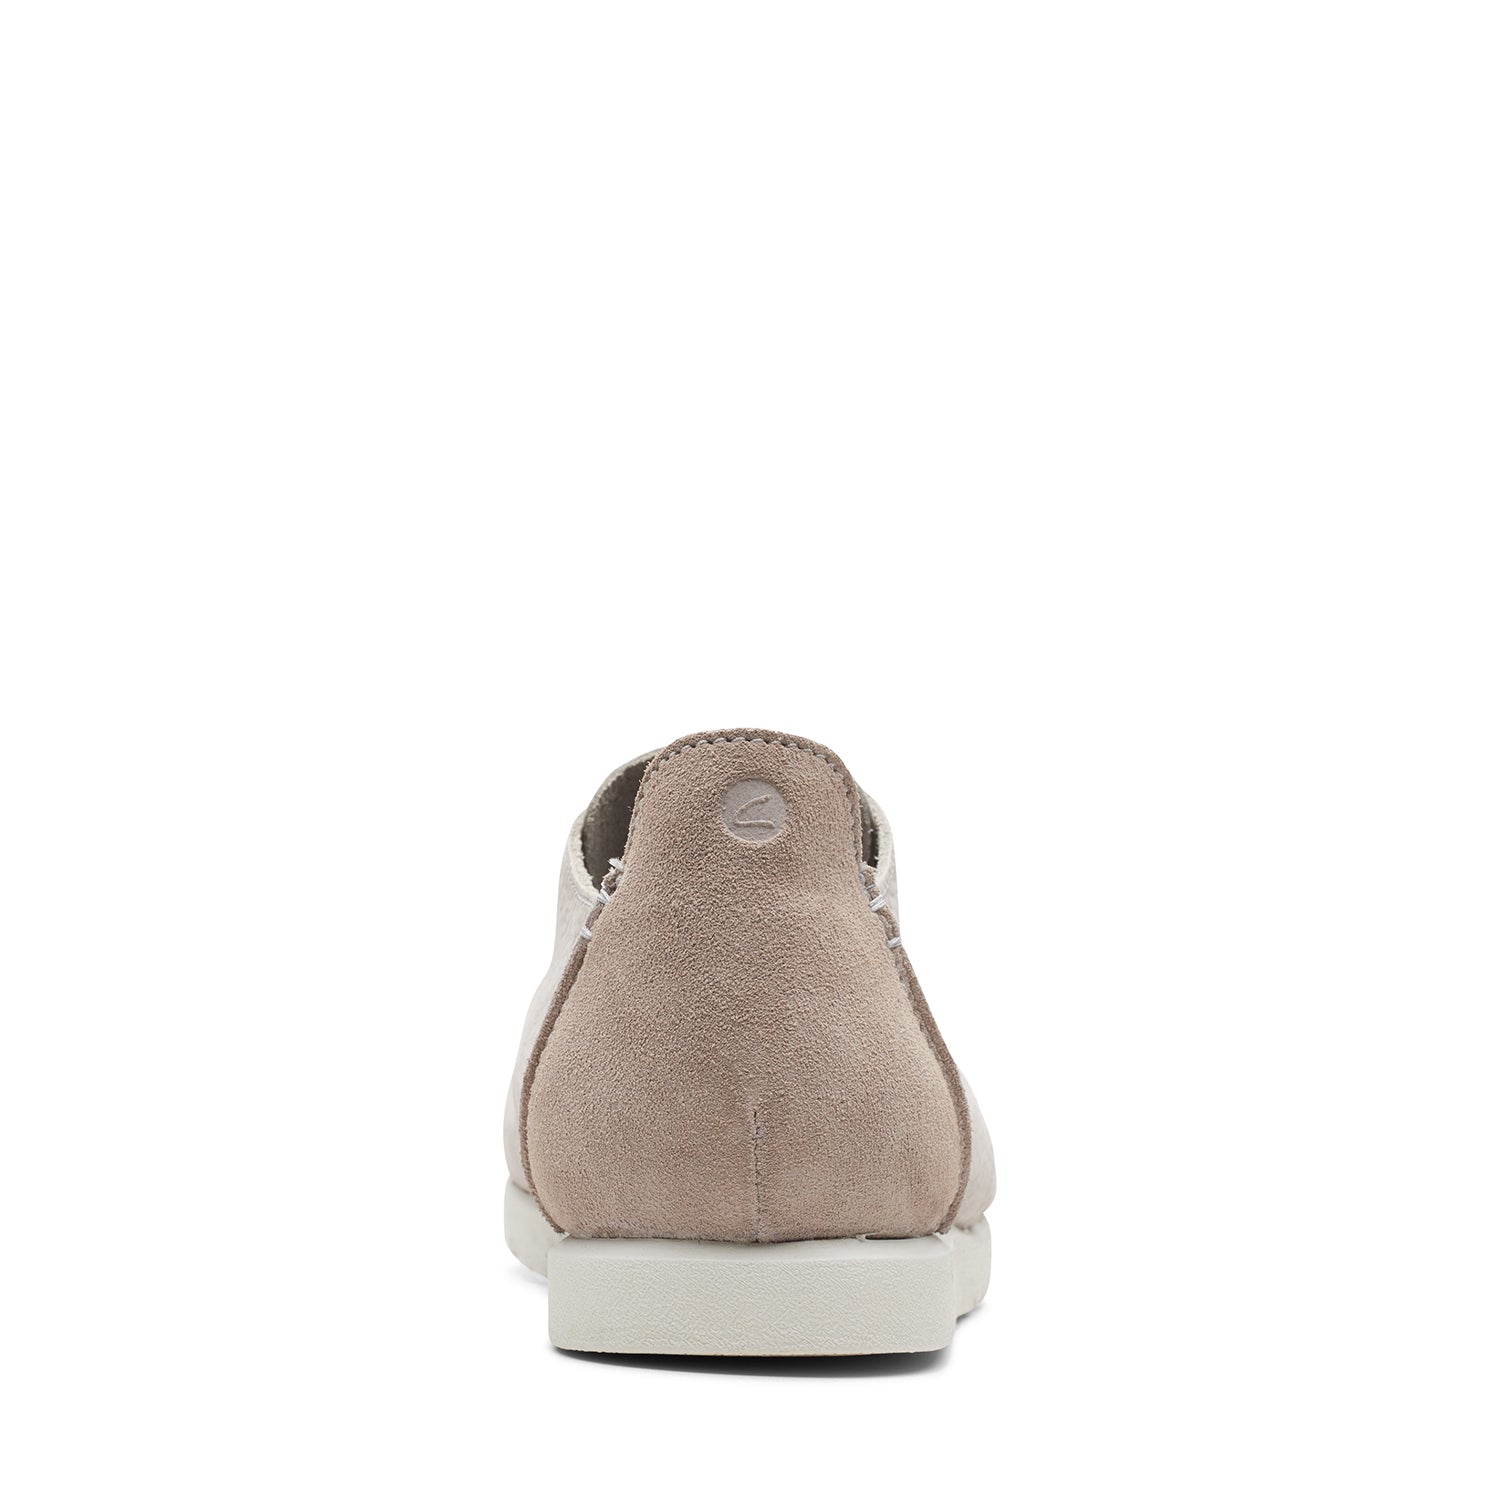 Clarks Shacrelite Low - Shoes - Stone Nubuck - 261652117 - G Width (Standard Fit)